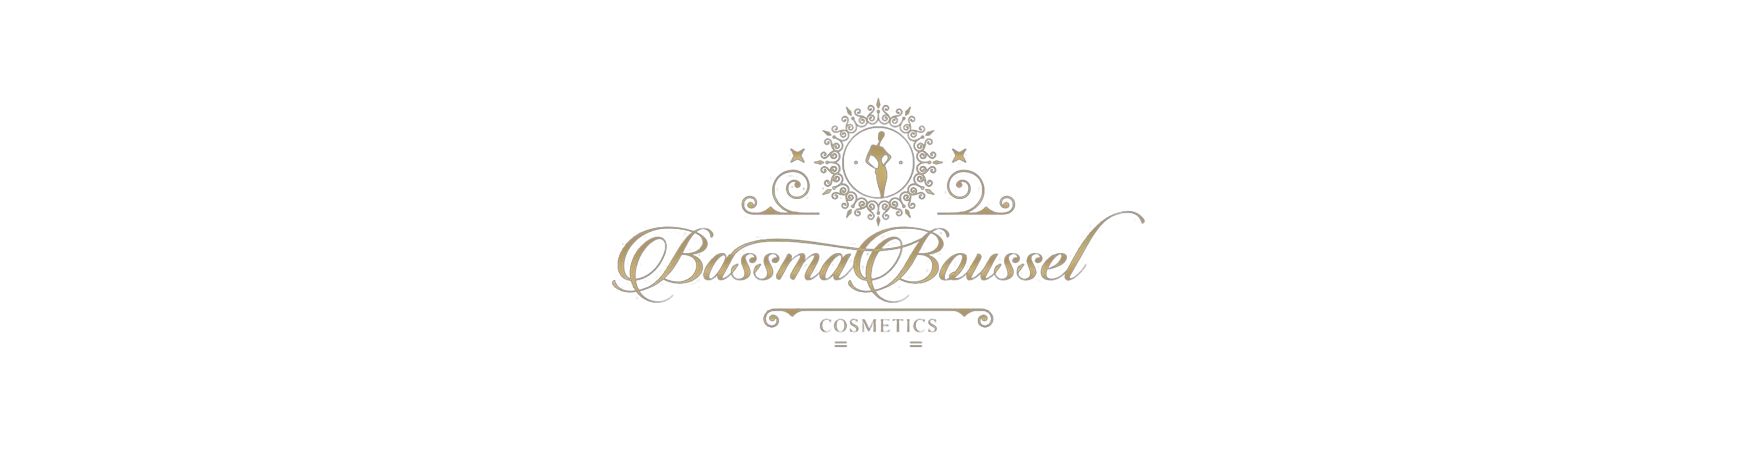 Bassma Boussel Cosmetics